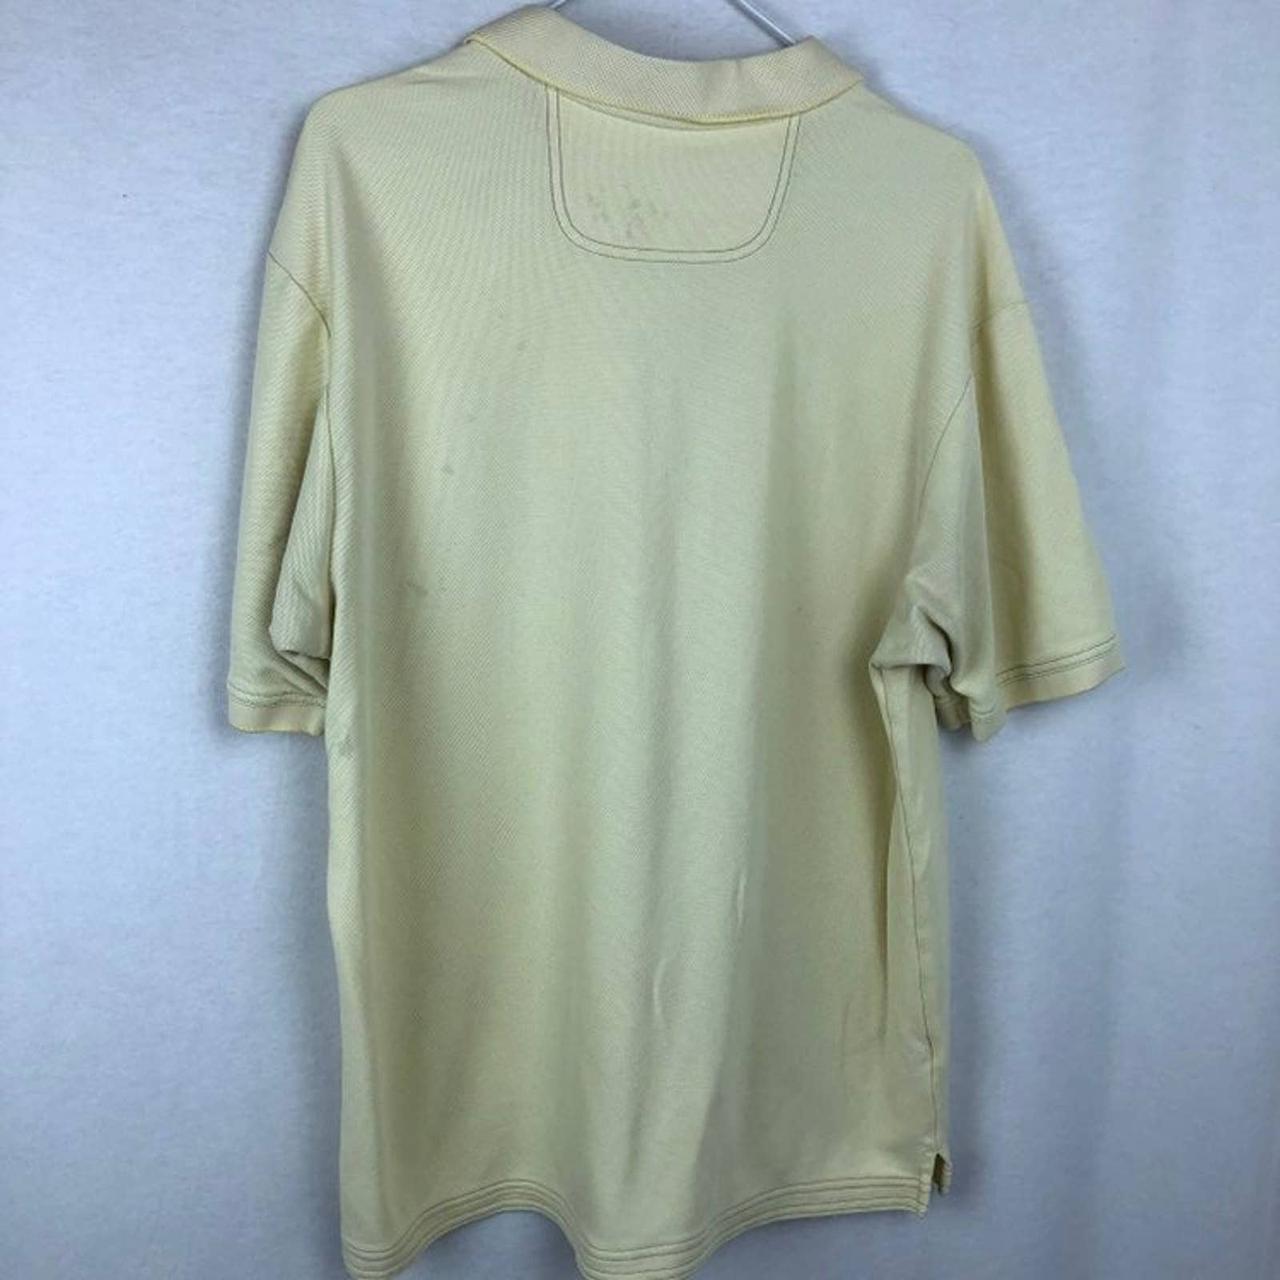 Product Image 2 - Yellow Tommy Bahama Polo Shirt.